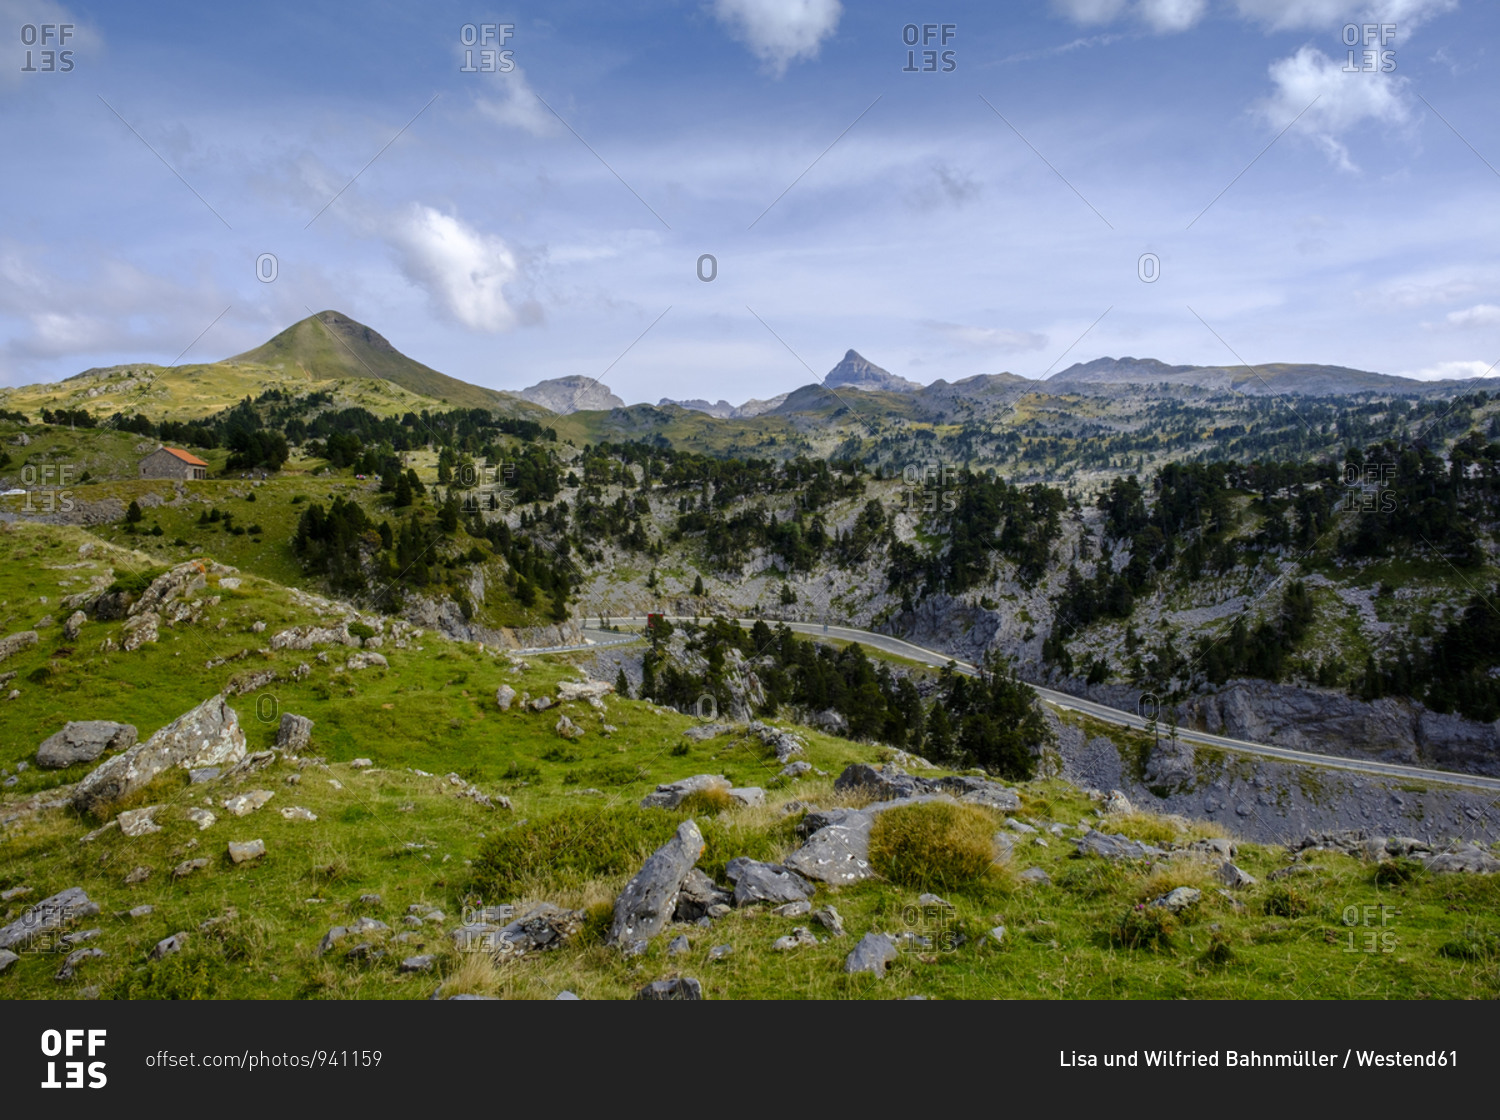 France- Pyrenees-Atlantiques- Scenic view of Col de la Pierre Saint-Martin mountain pass in summer